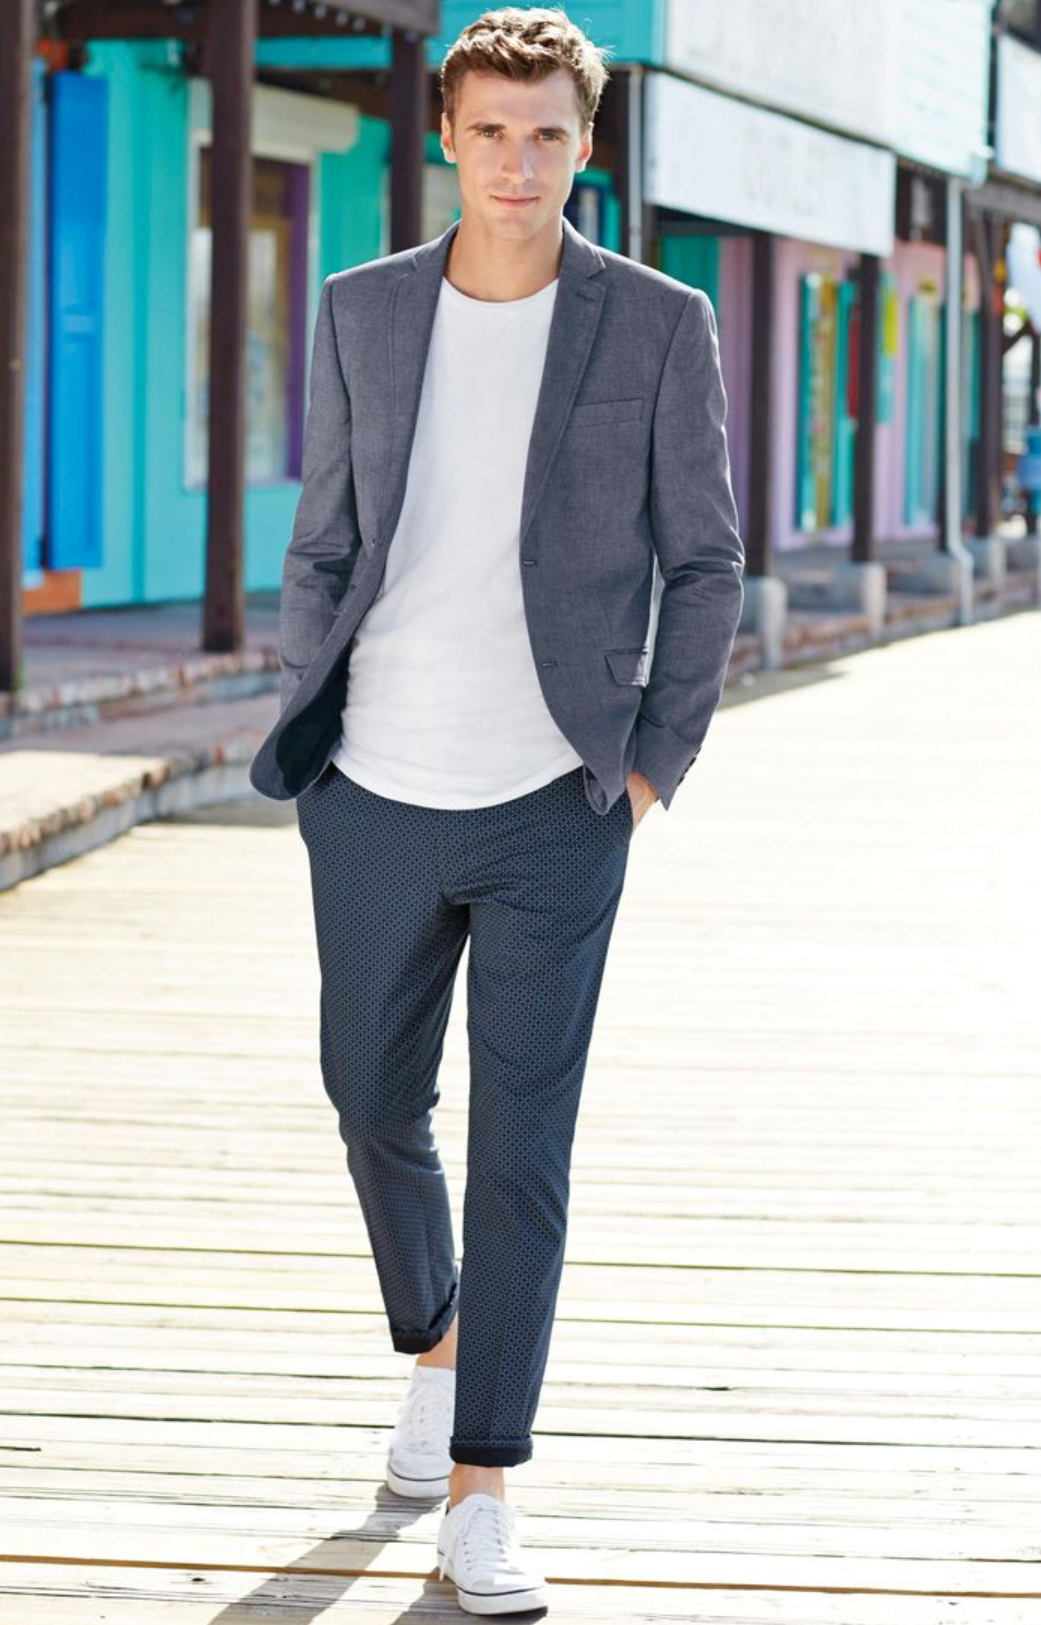 Como combinar pantalones blancos para hombre - Blog Moda Hombre